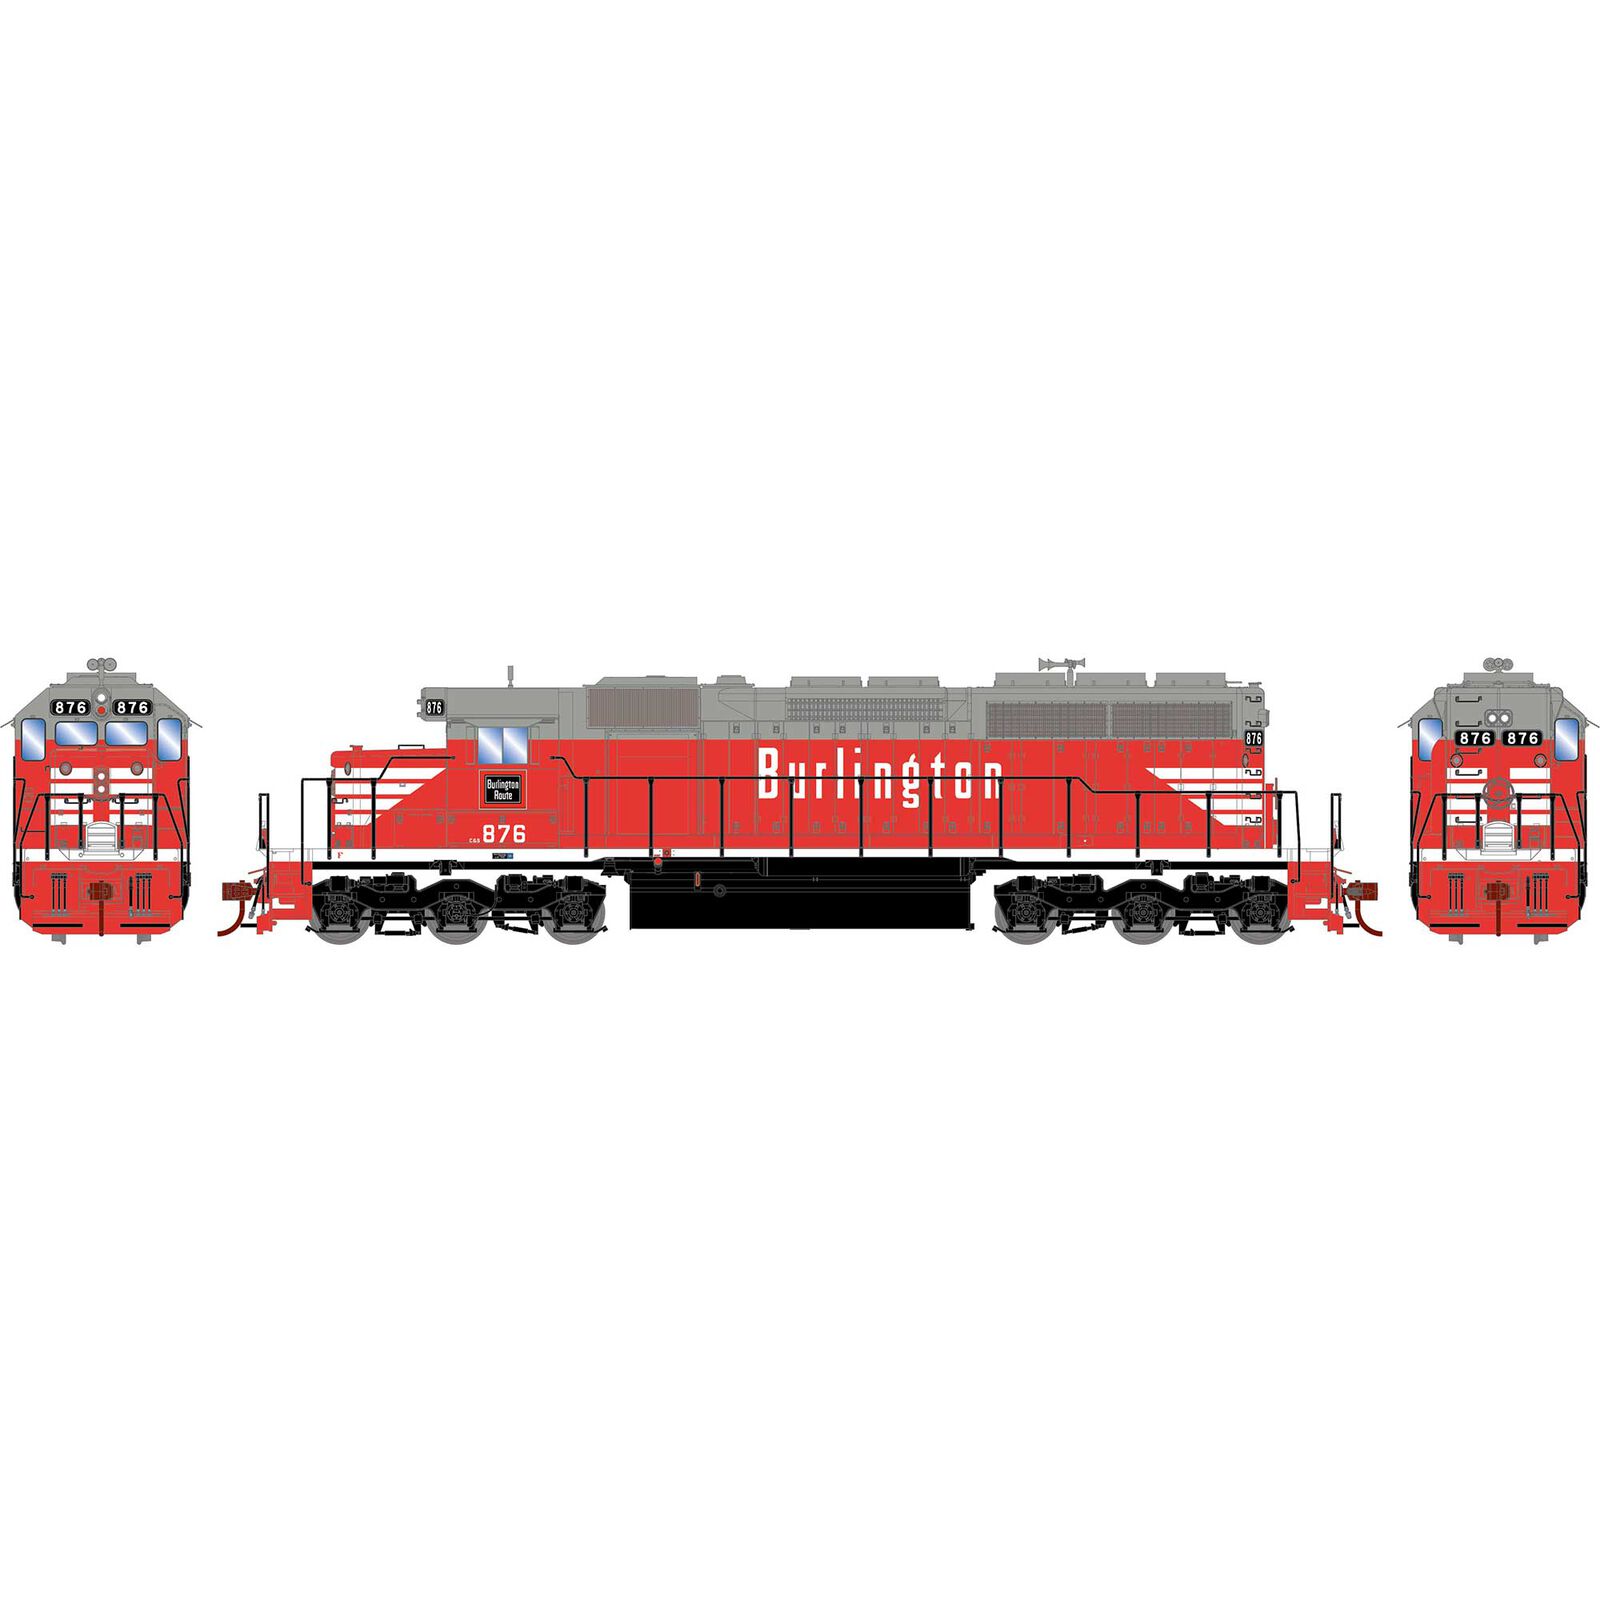 HO SD40 Locomotive with DCC & Sound, Colorado & Southern #876